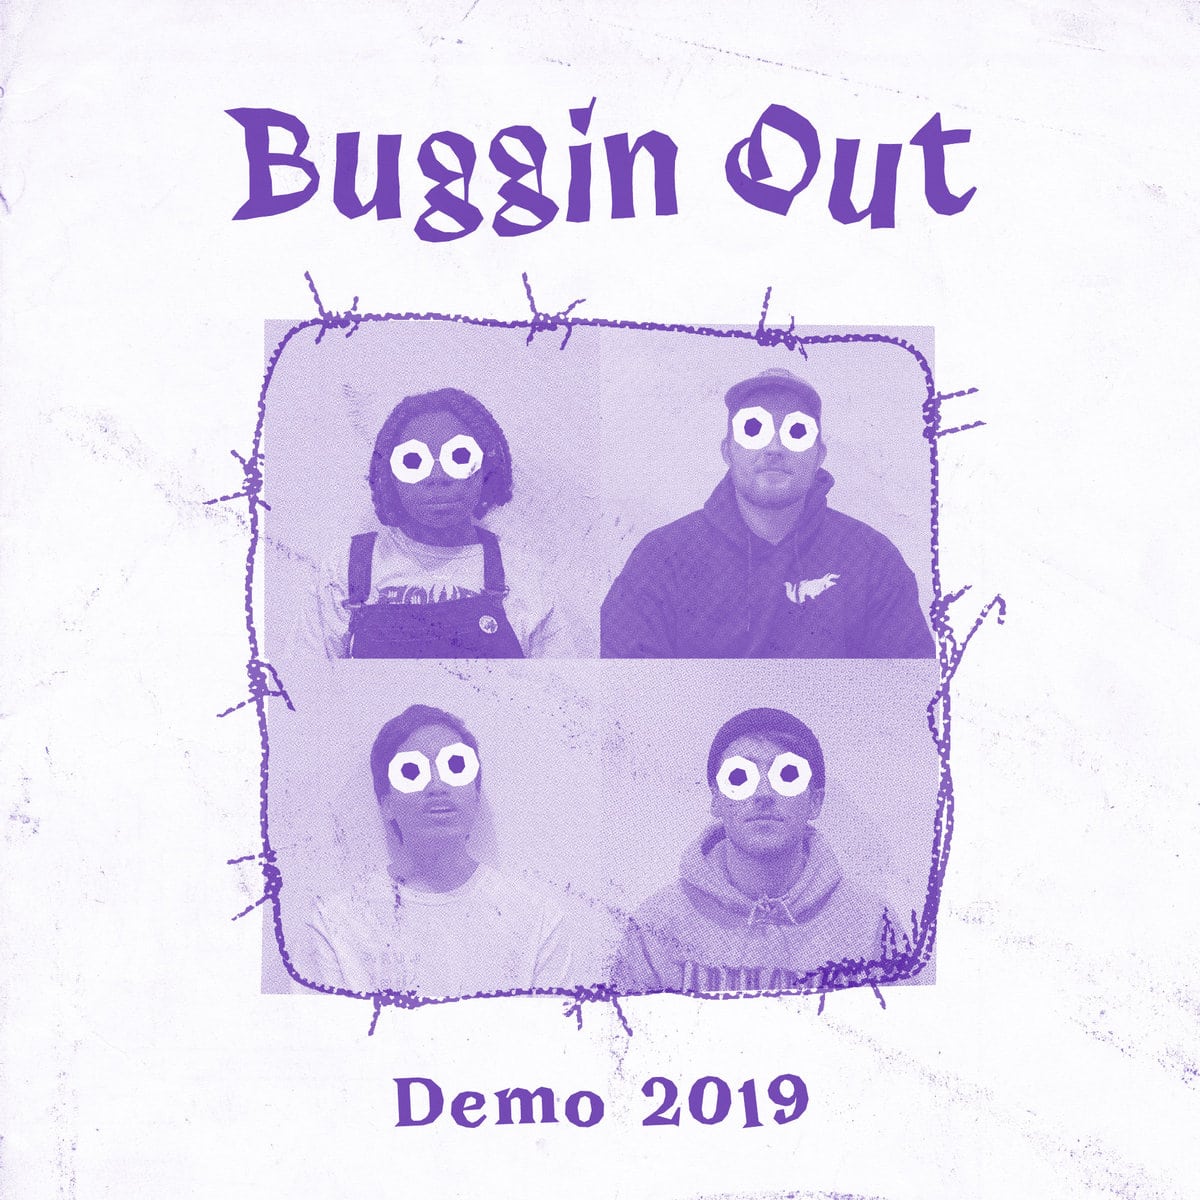 Demo 2019. Buggin out. Buggin.